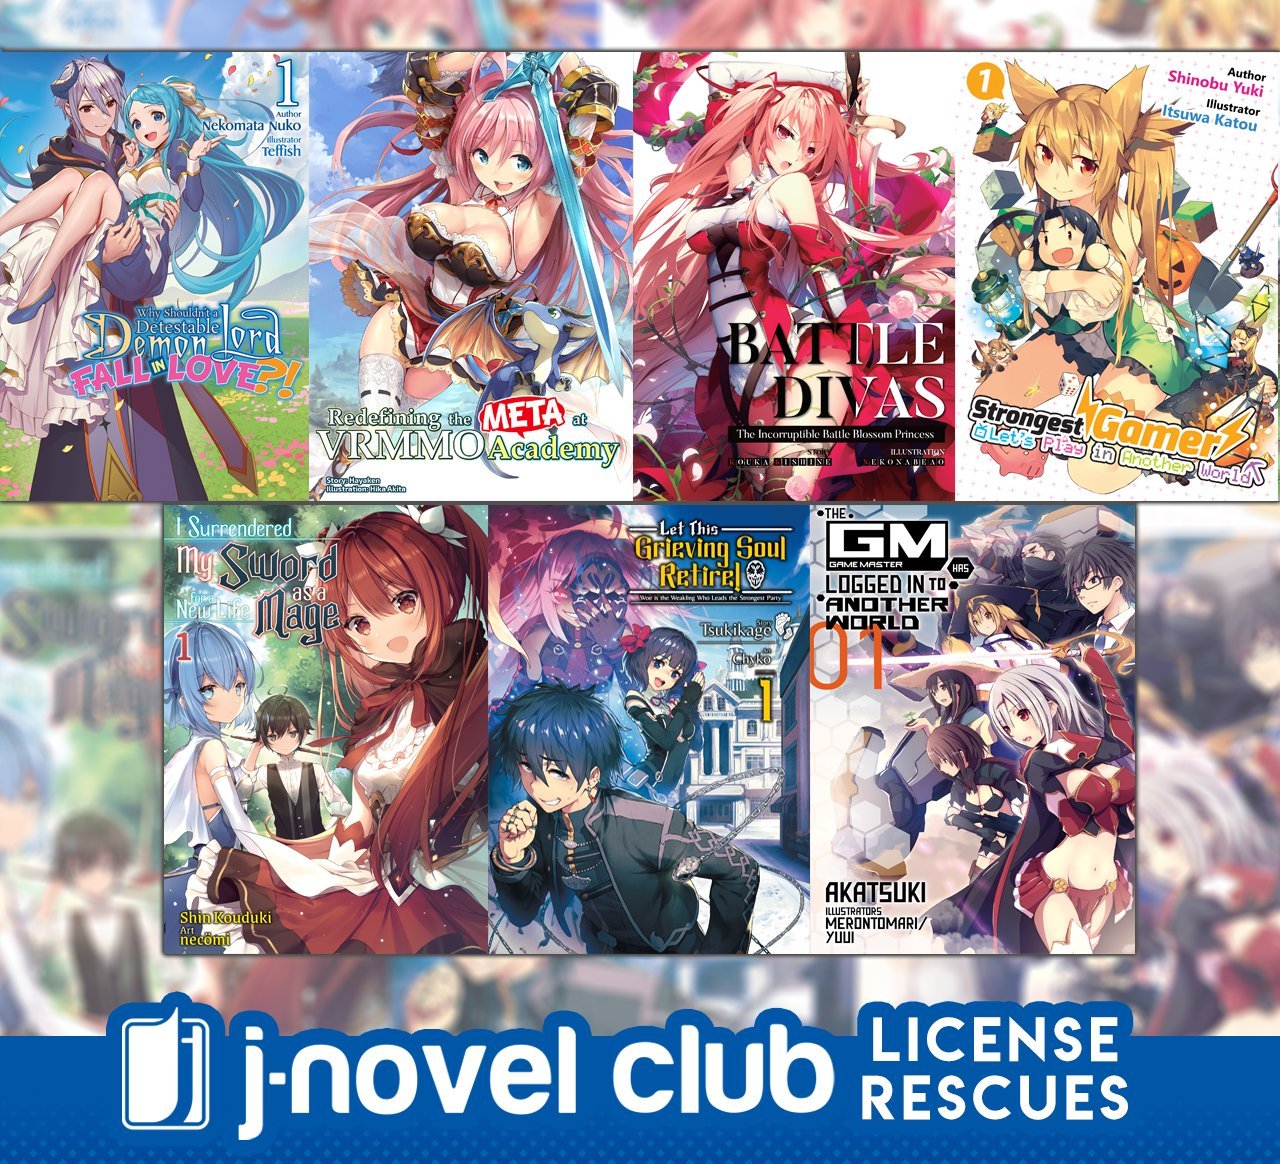 J-Novel Club Rescues Several Sol Press Licenses at Anime Expo